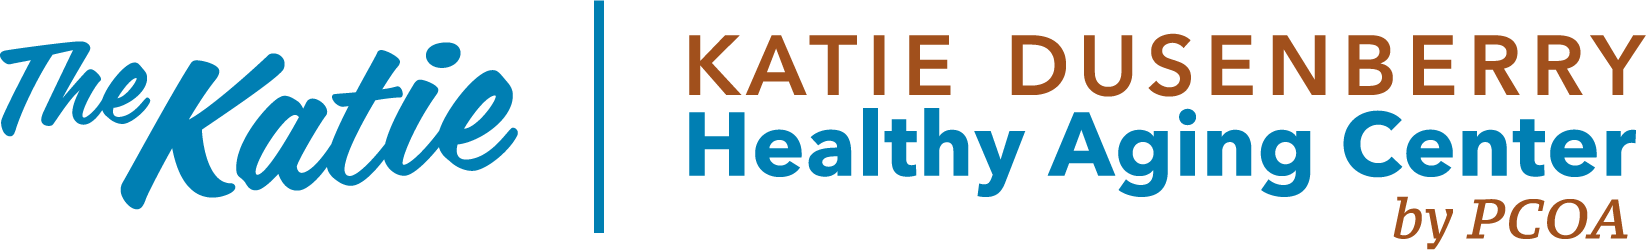 Understanding Medicare (In-Person Attendance PCOA Katie Dusenberry Center)